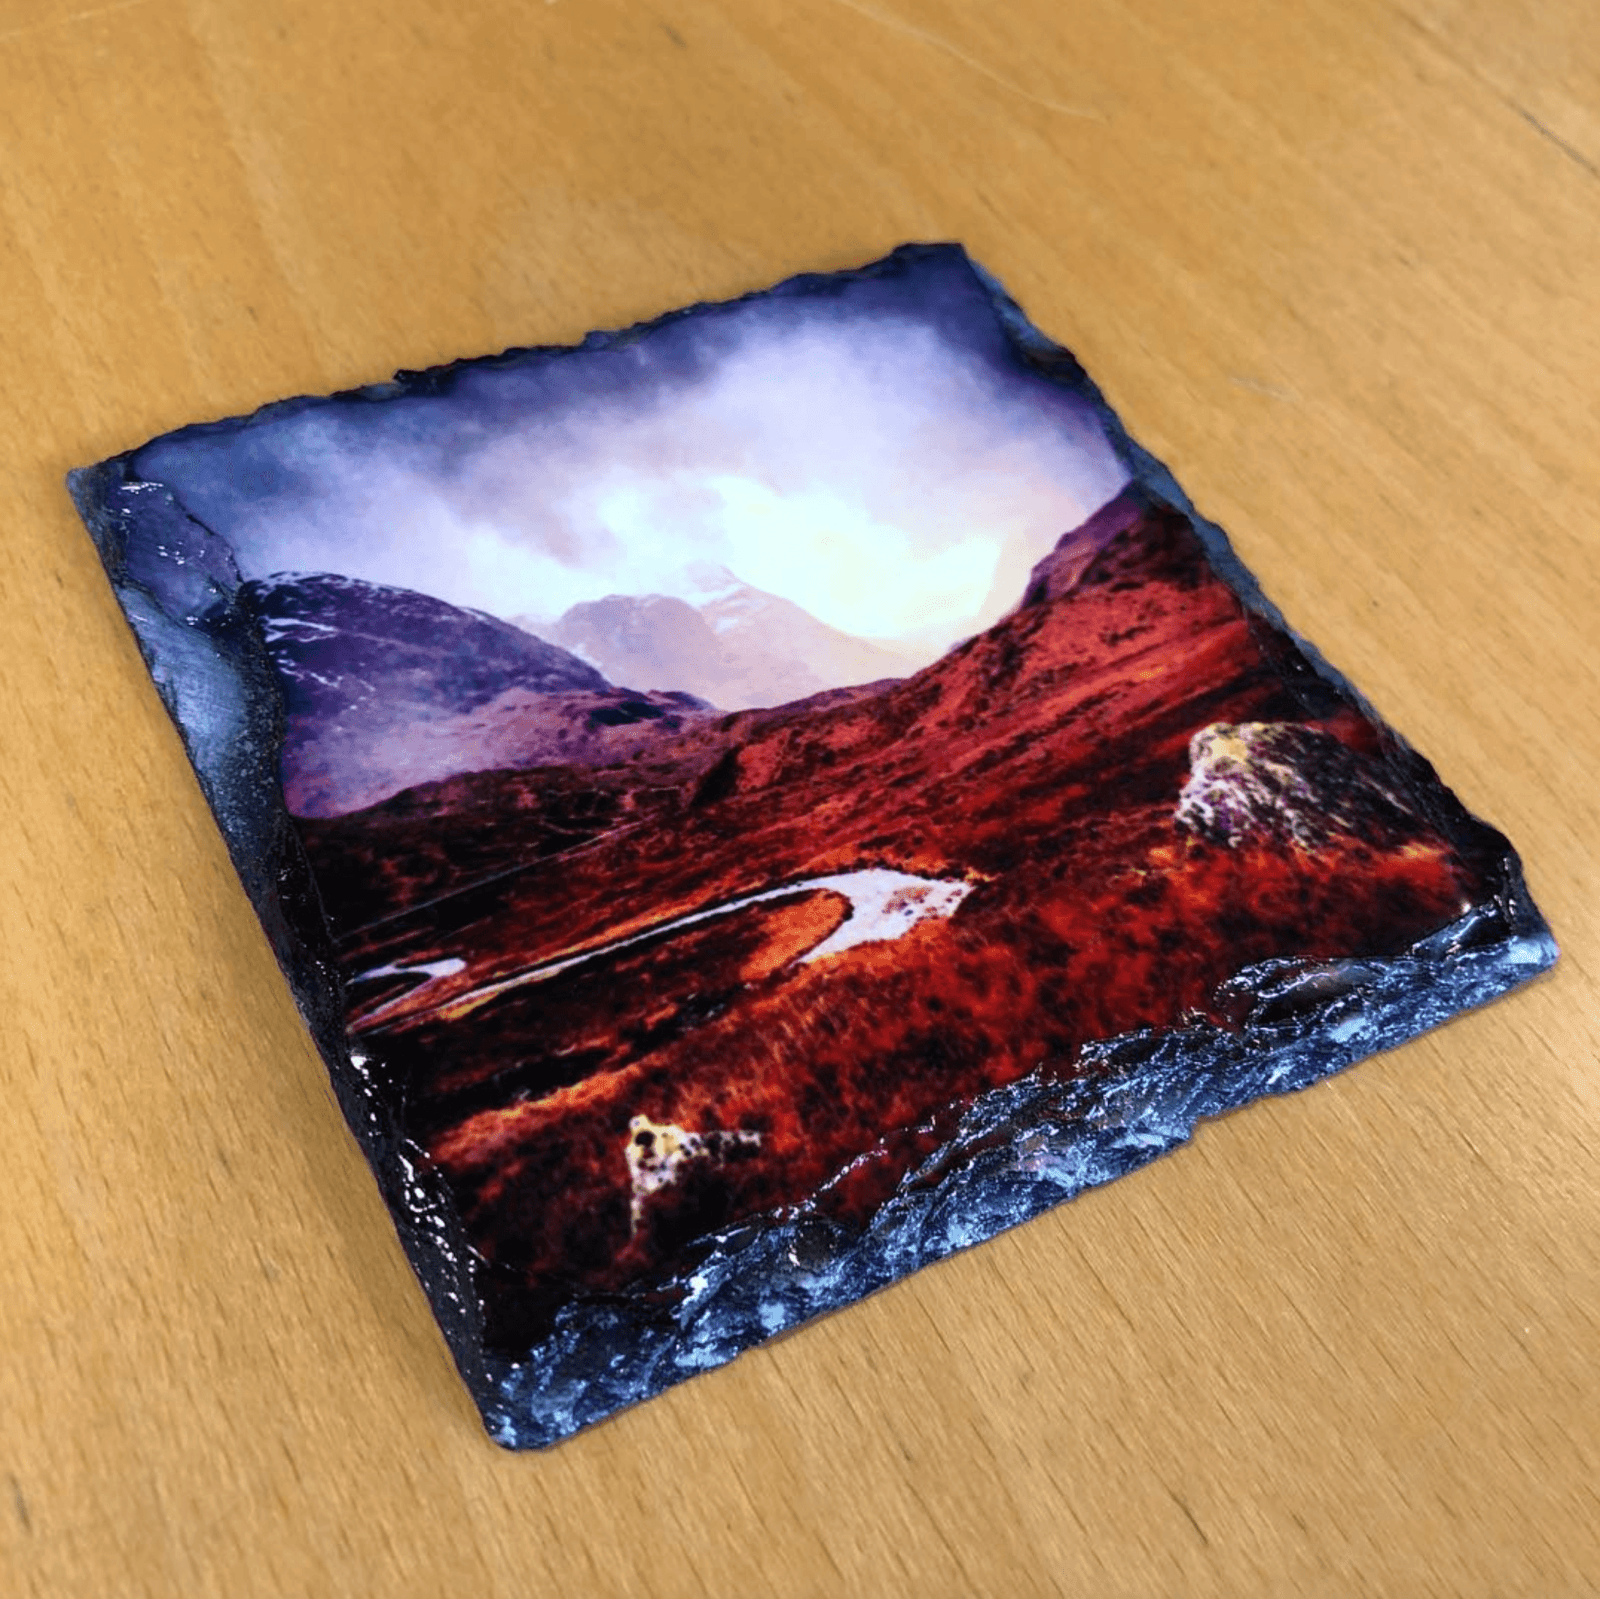 A Brooding Glencoe Scottish Slate Art-Slate Art-Glencoe Art Gallery-Paintings, Prints, Homeware, Art Gifts From Scotland By Scottish Artist Kevin Hunter